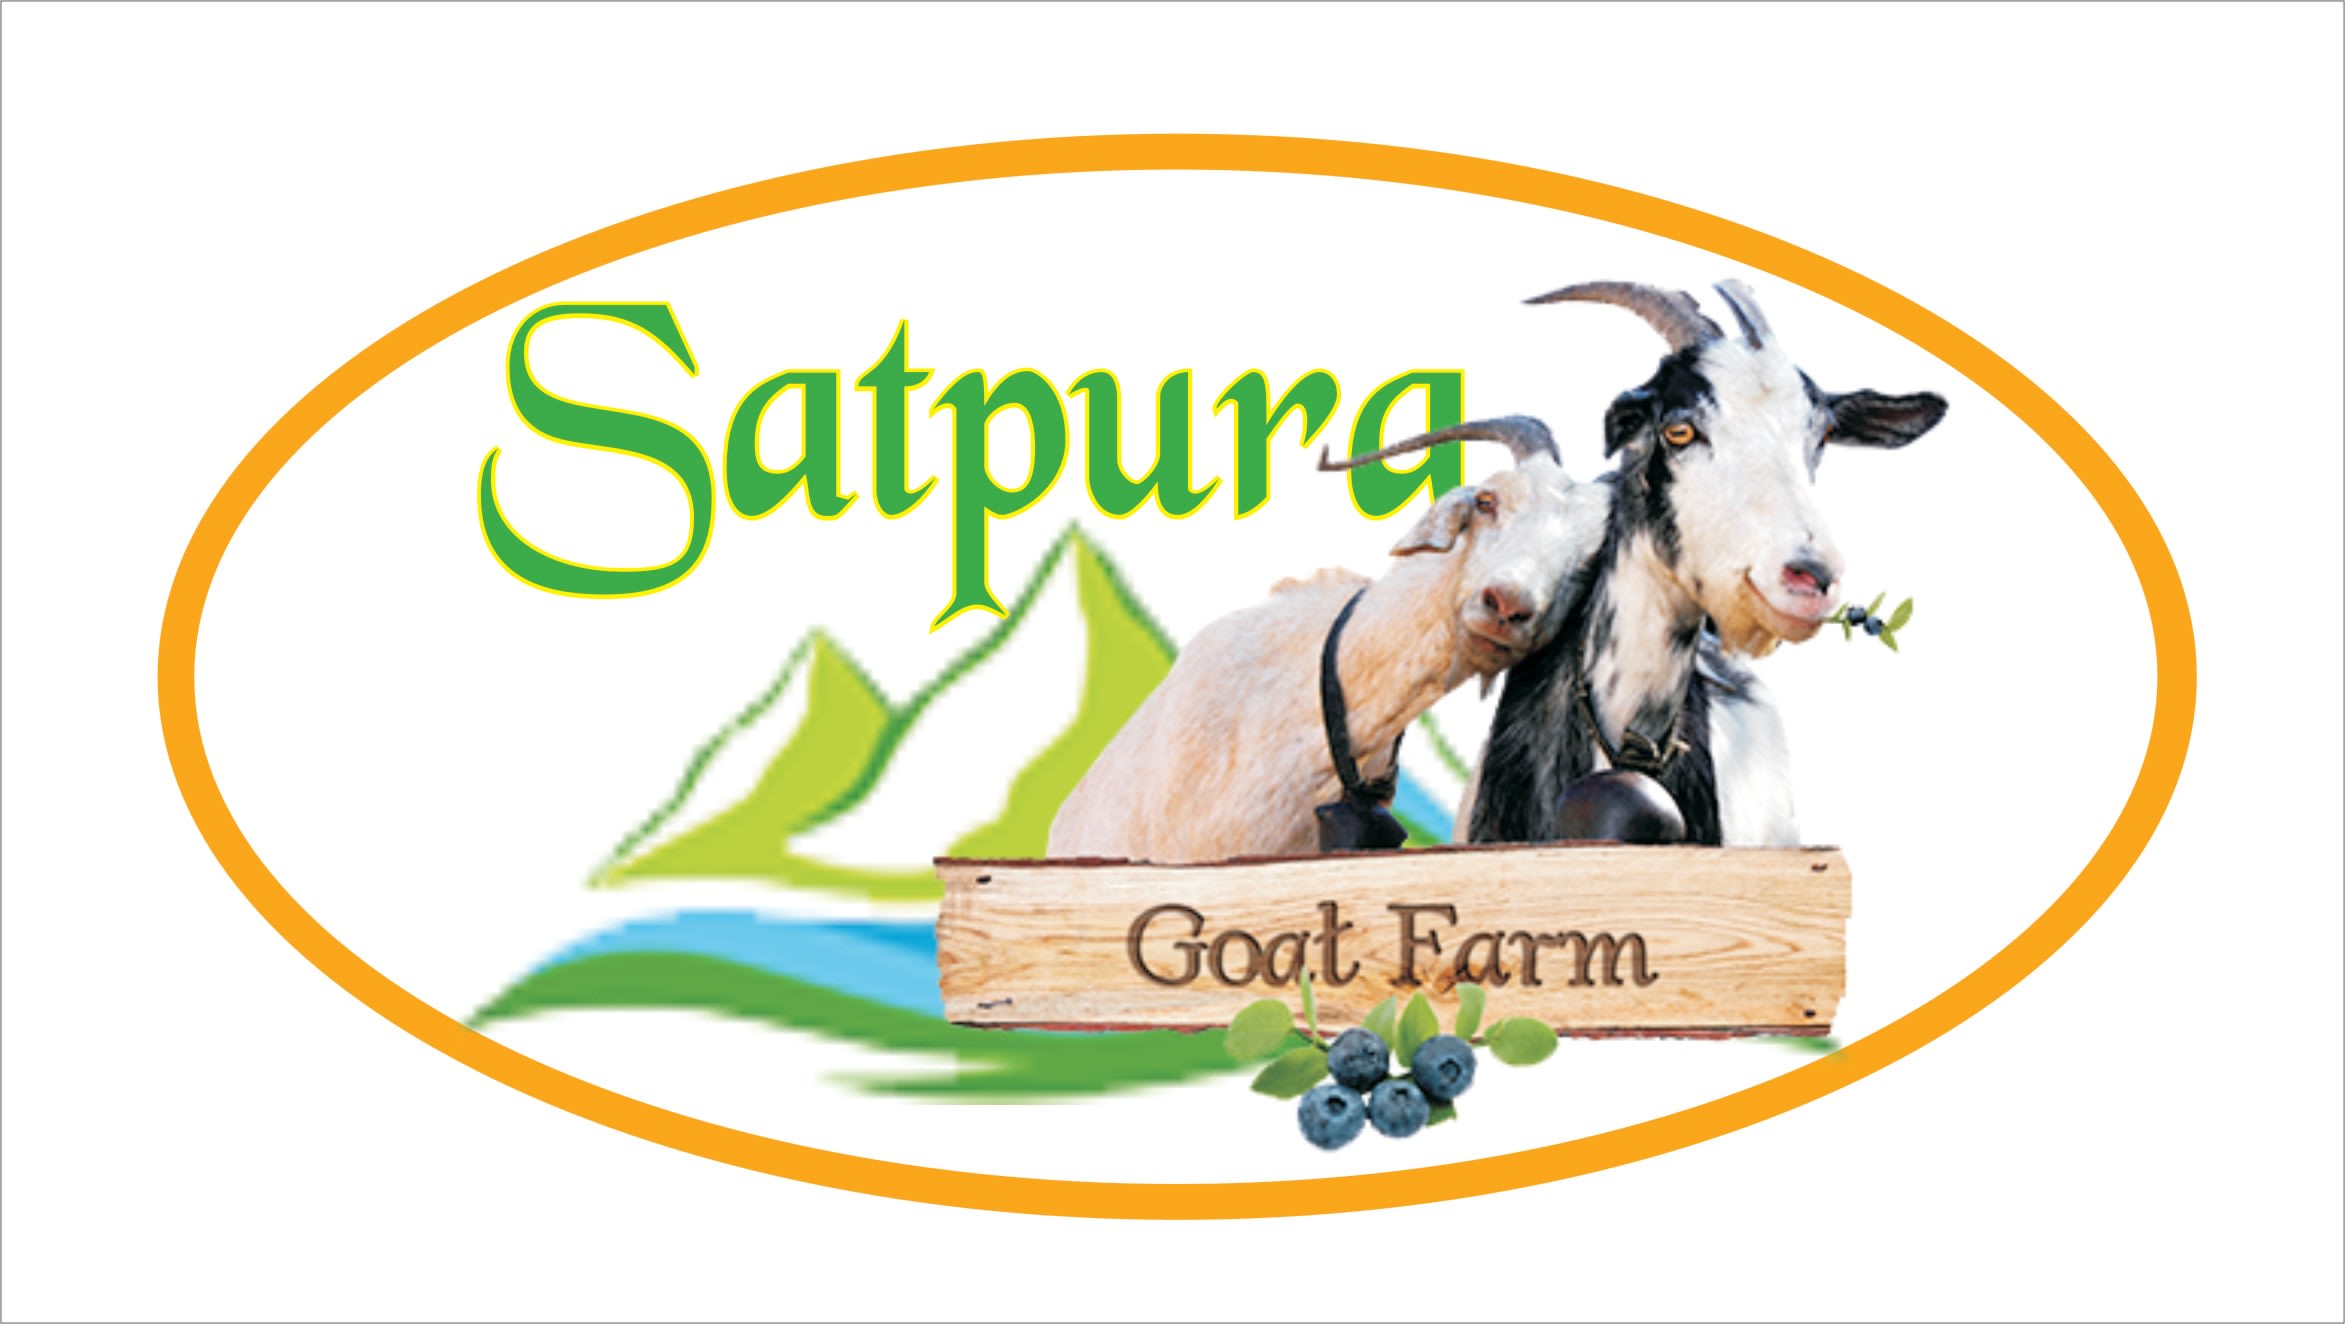 Satpura Goat Farm